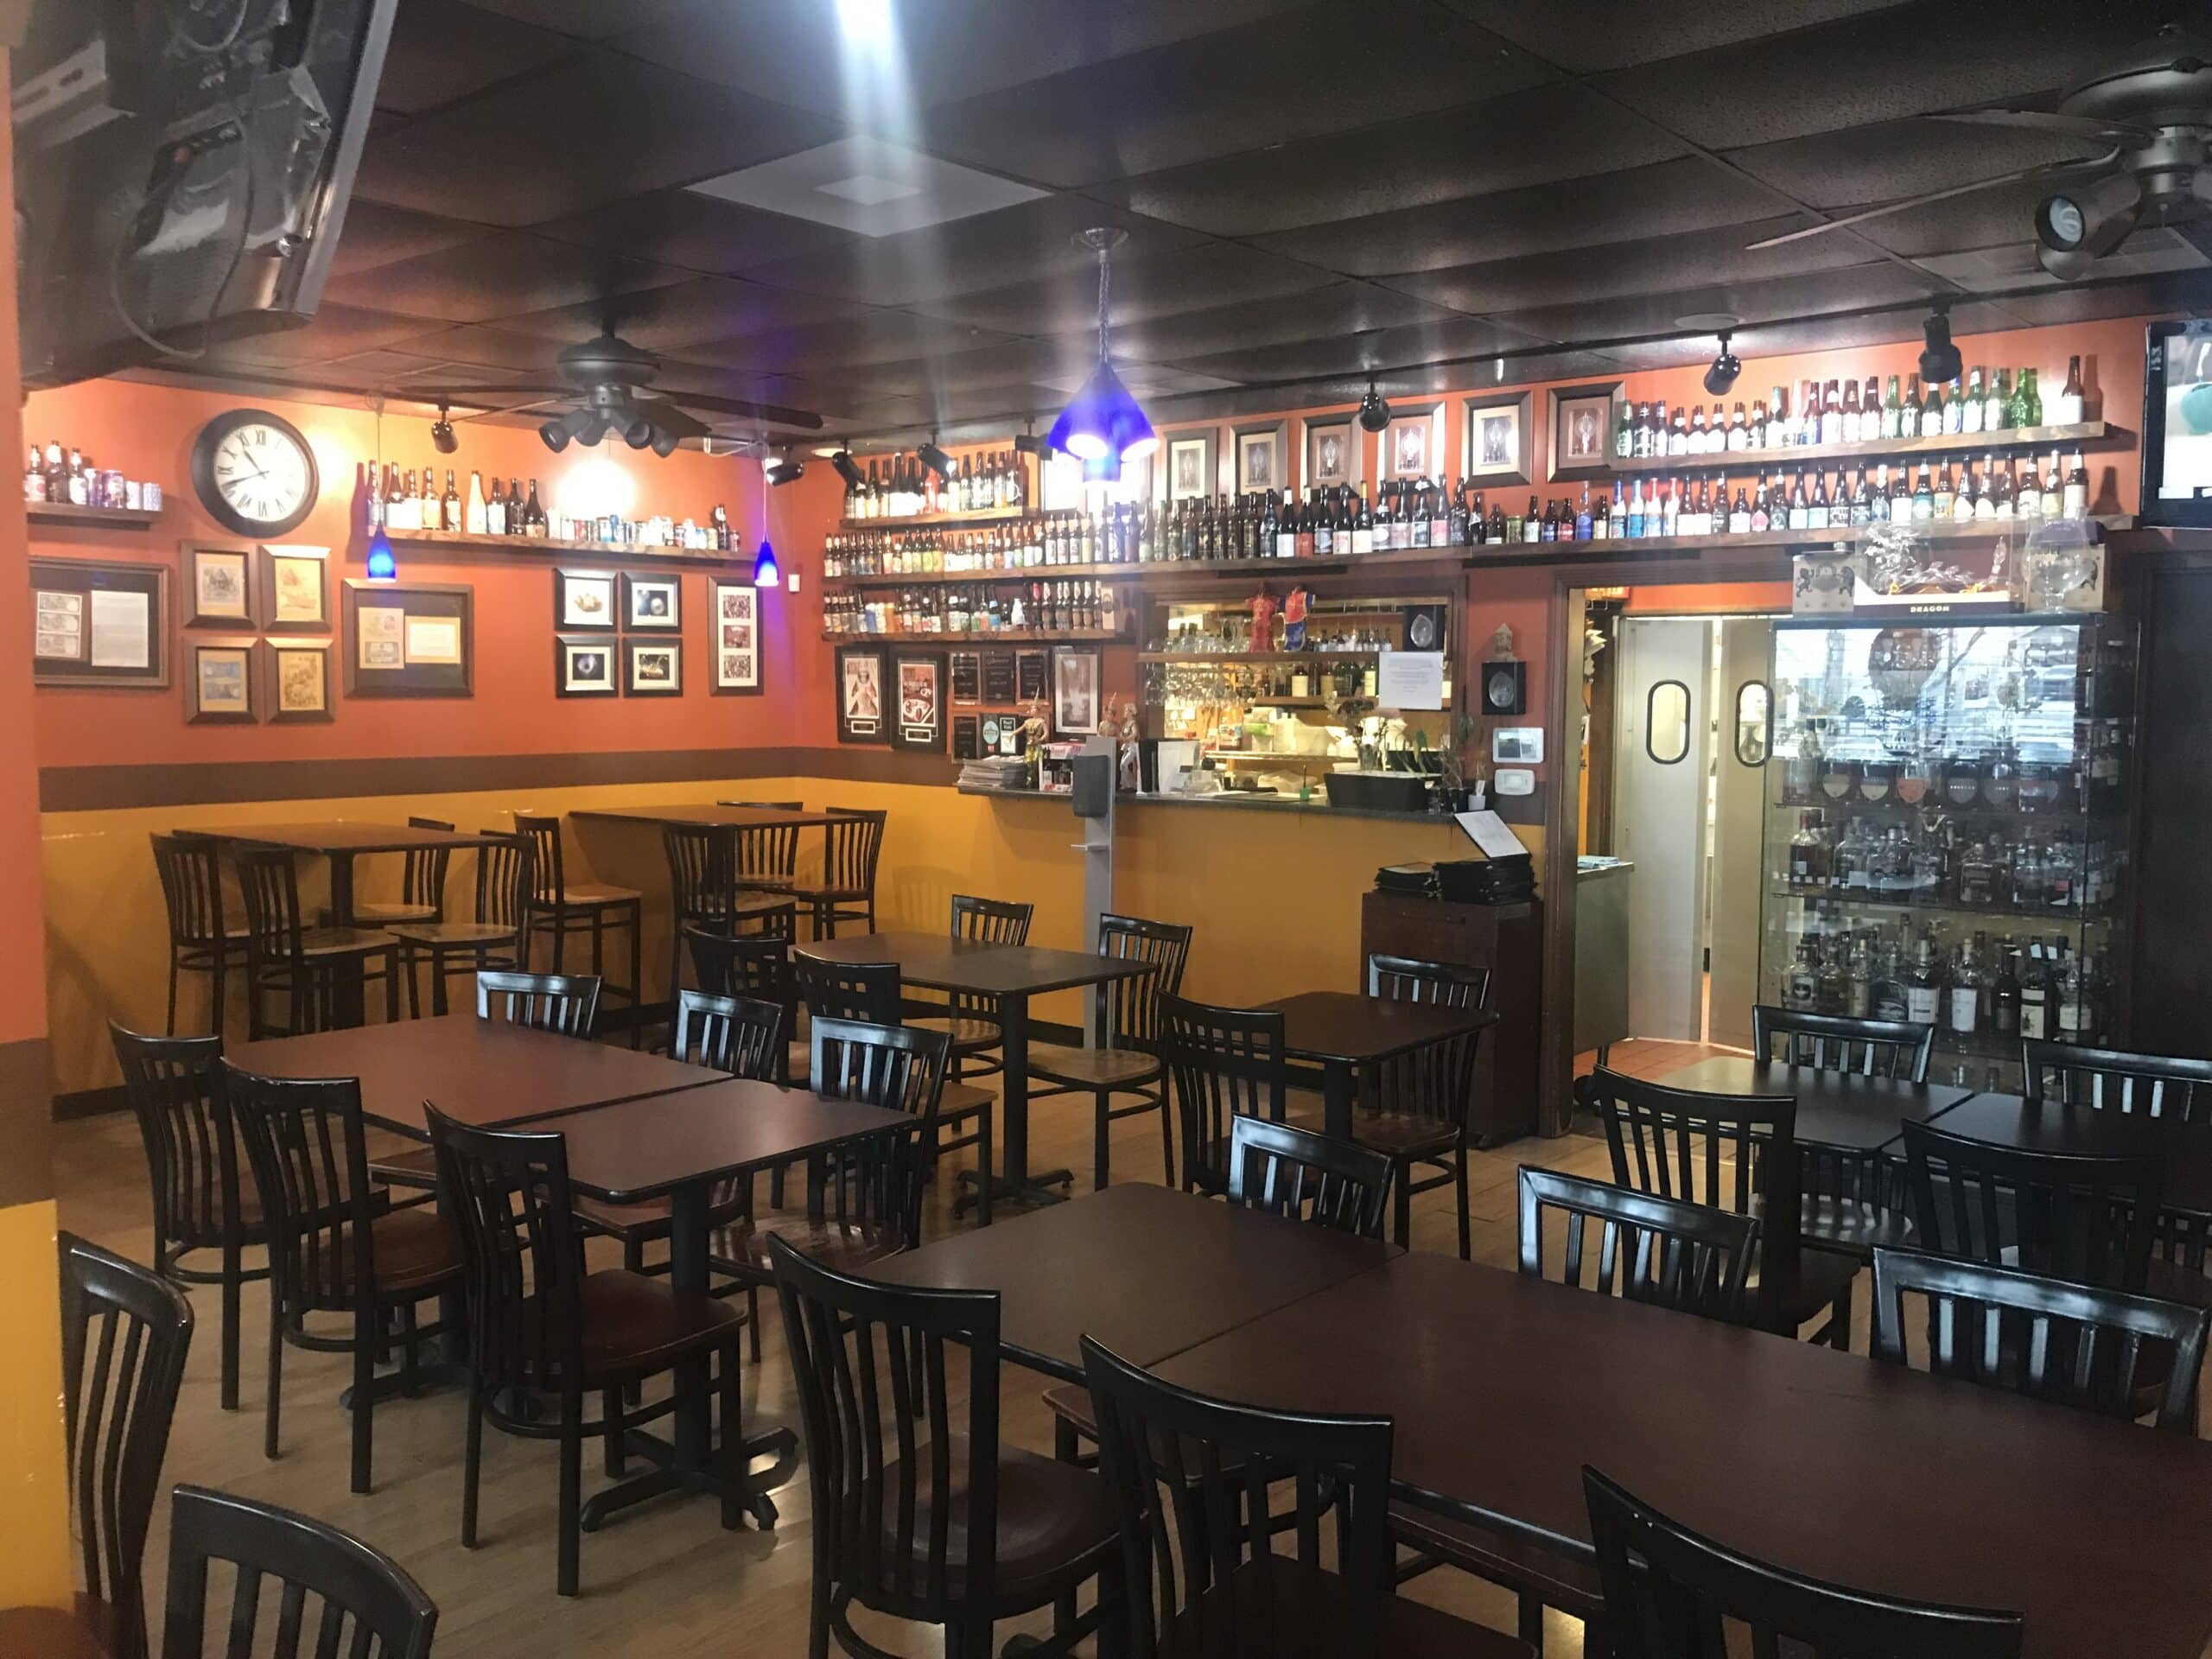 Thai Restaurant Review – Pearl Cafe, Florissant, MO